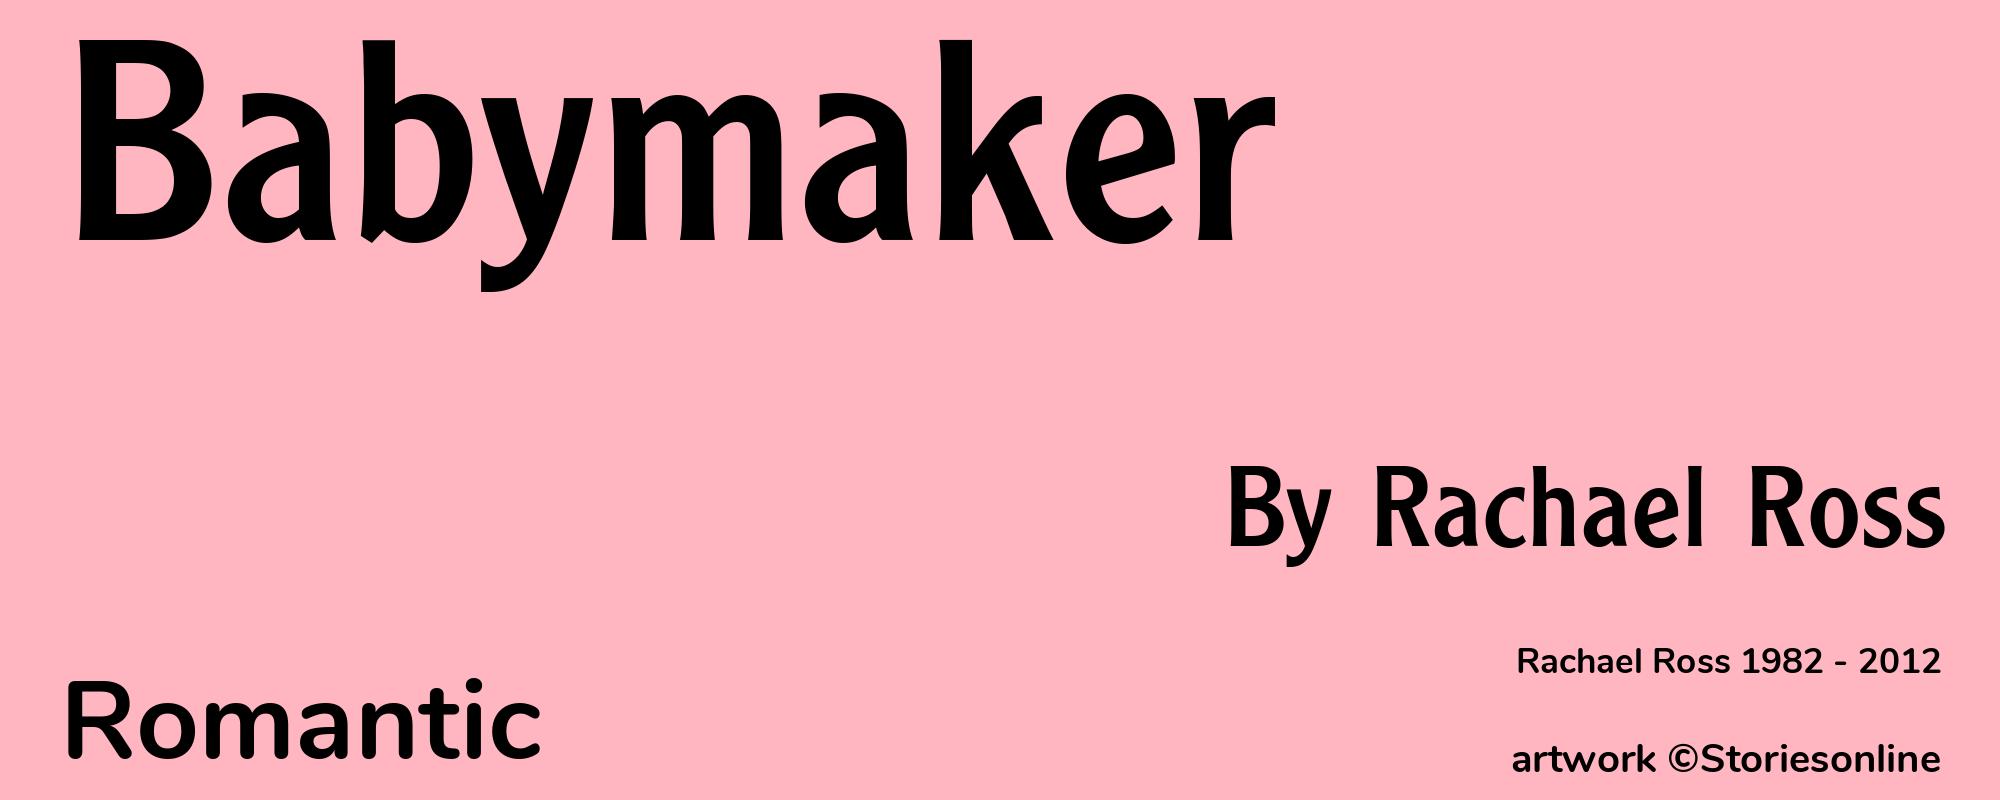 Babymaker - Cover